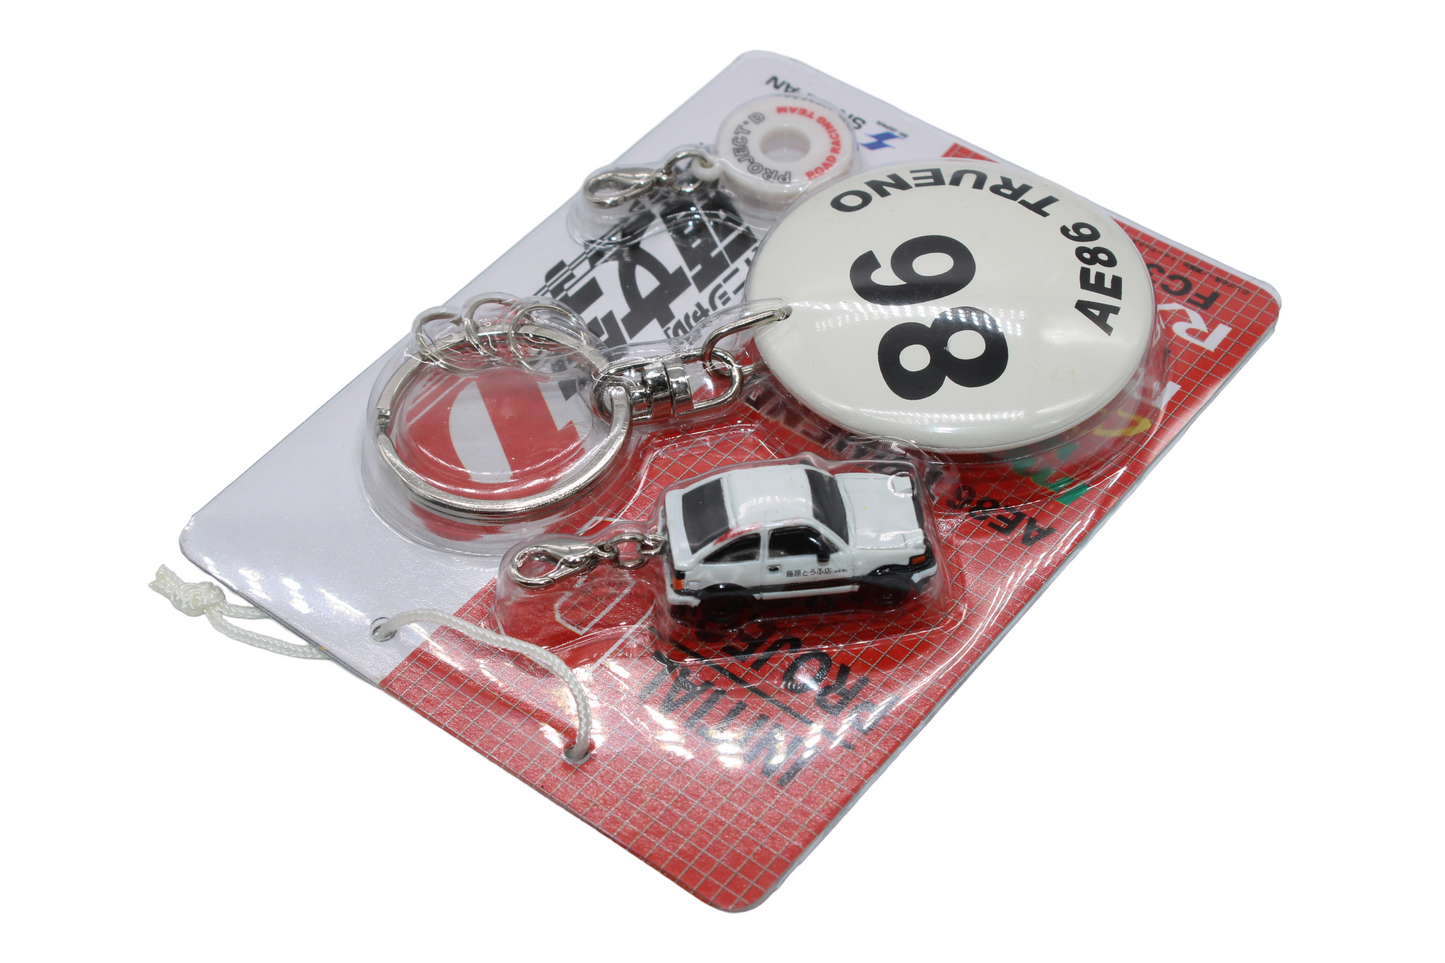 AE86 Initial D keychain set